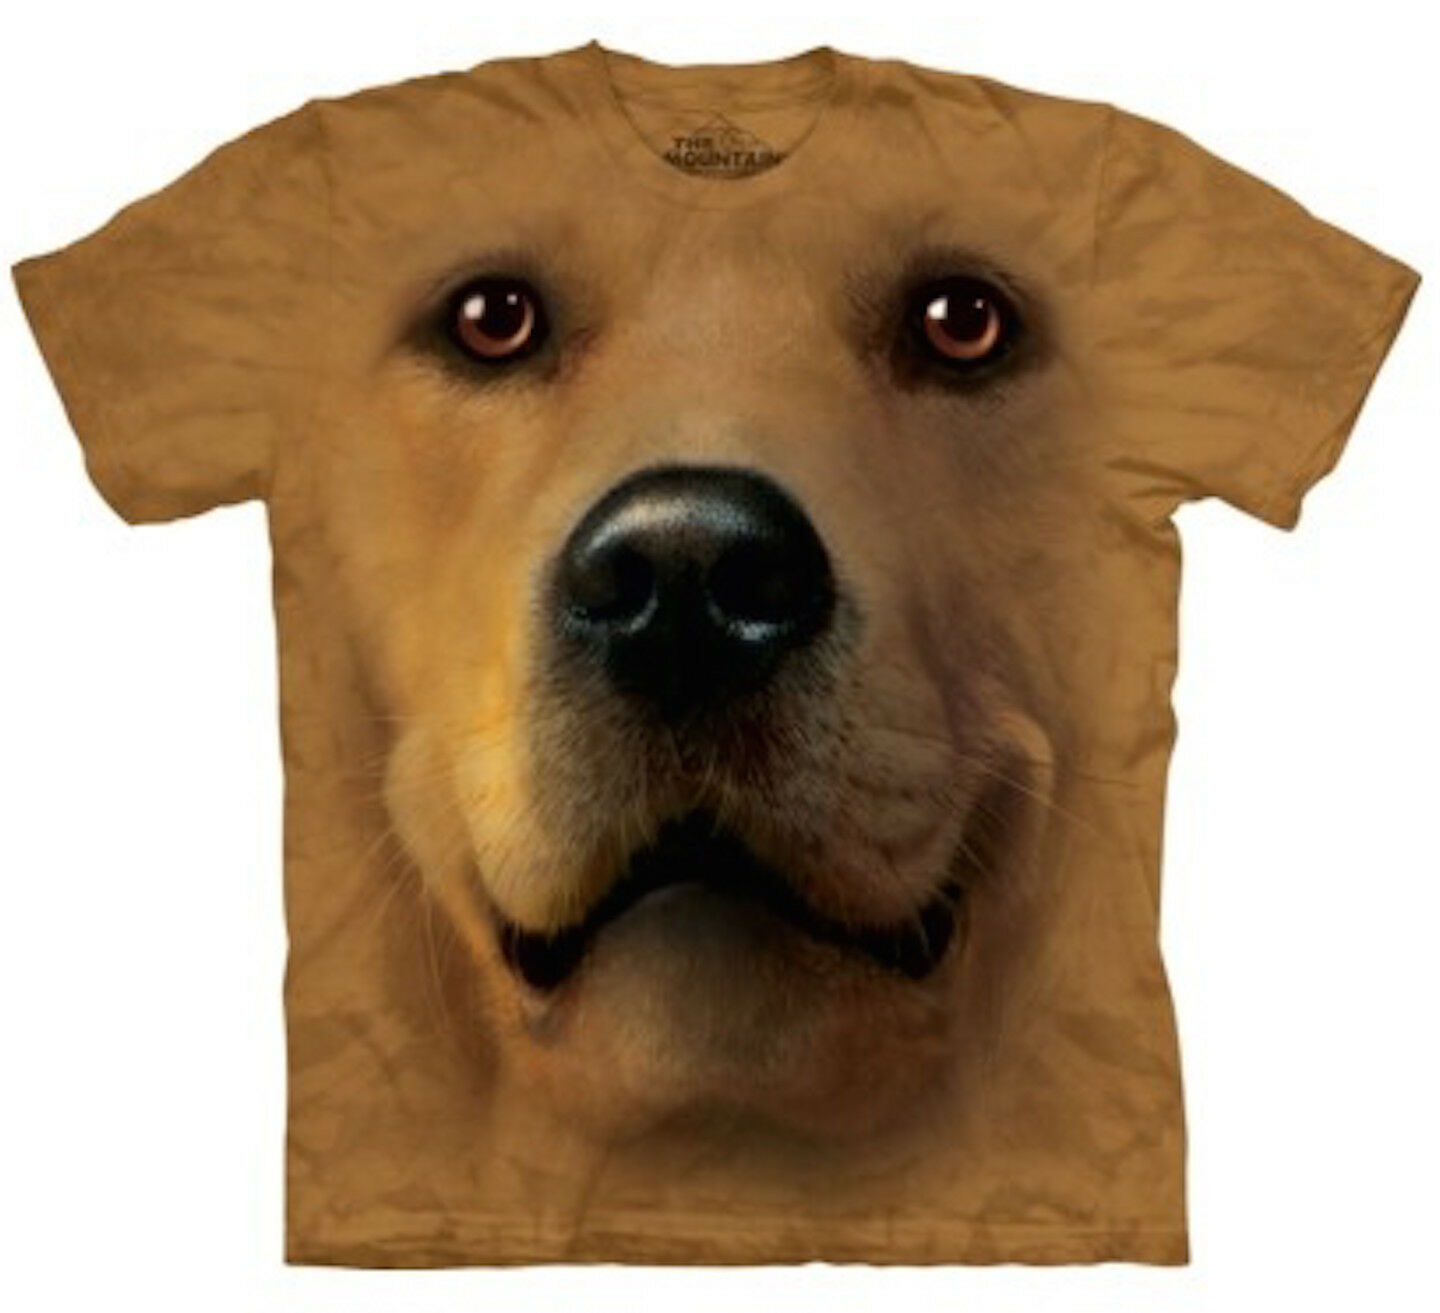 The Mountain Dog Golden Retriever Big Face Puppy Dogs Orange Cotton Shirt S-3X